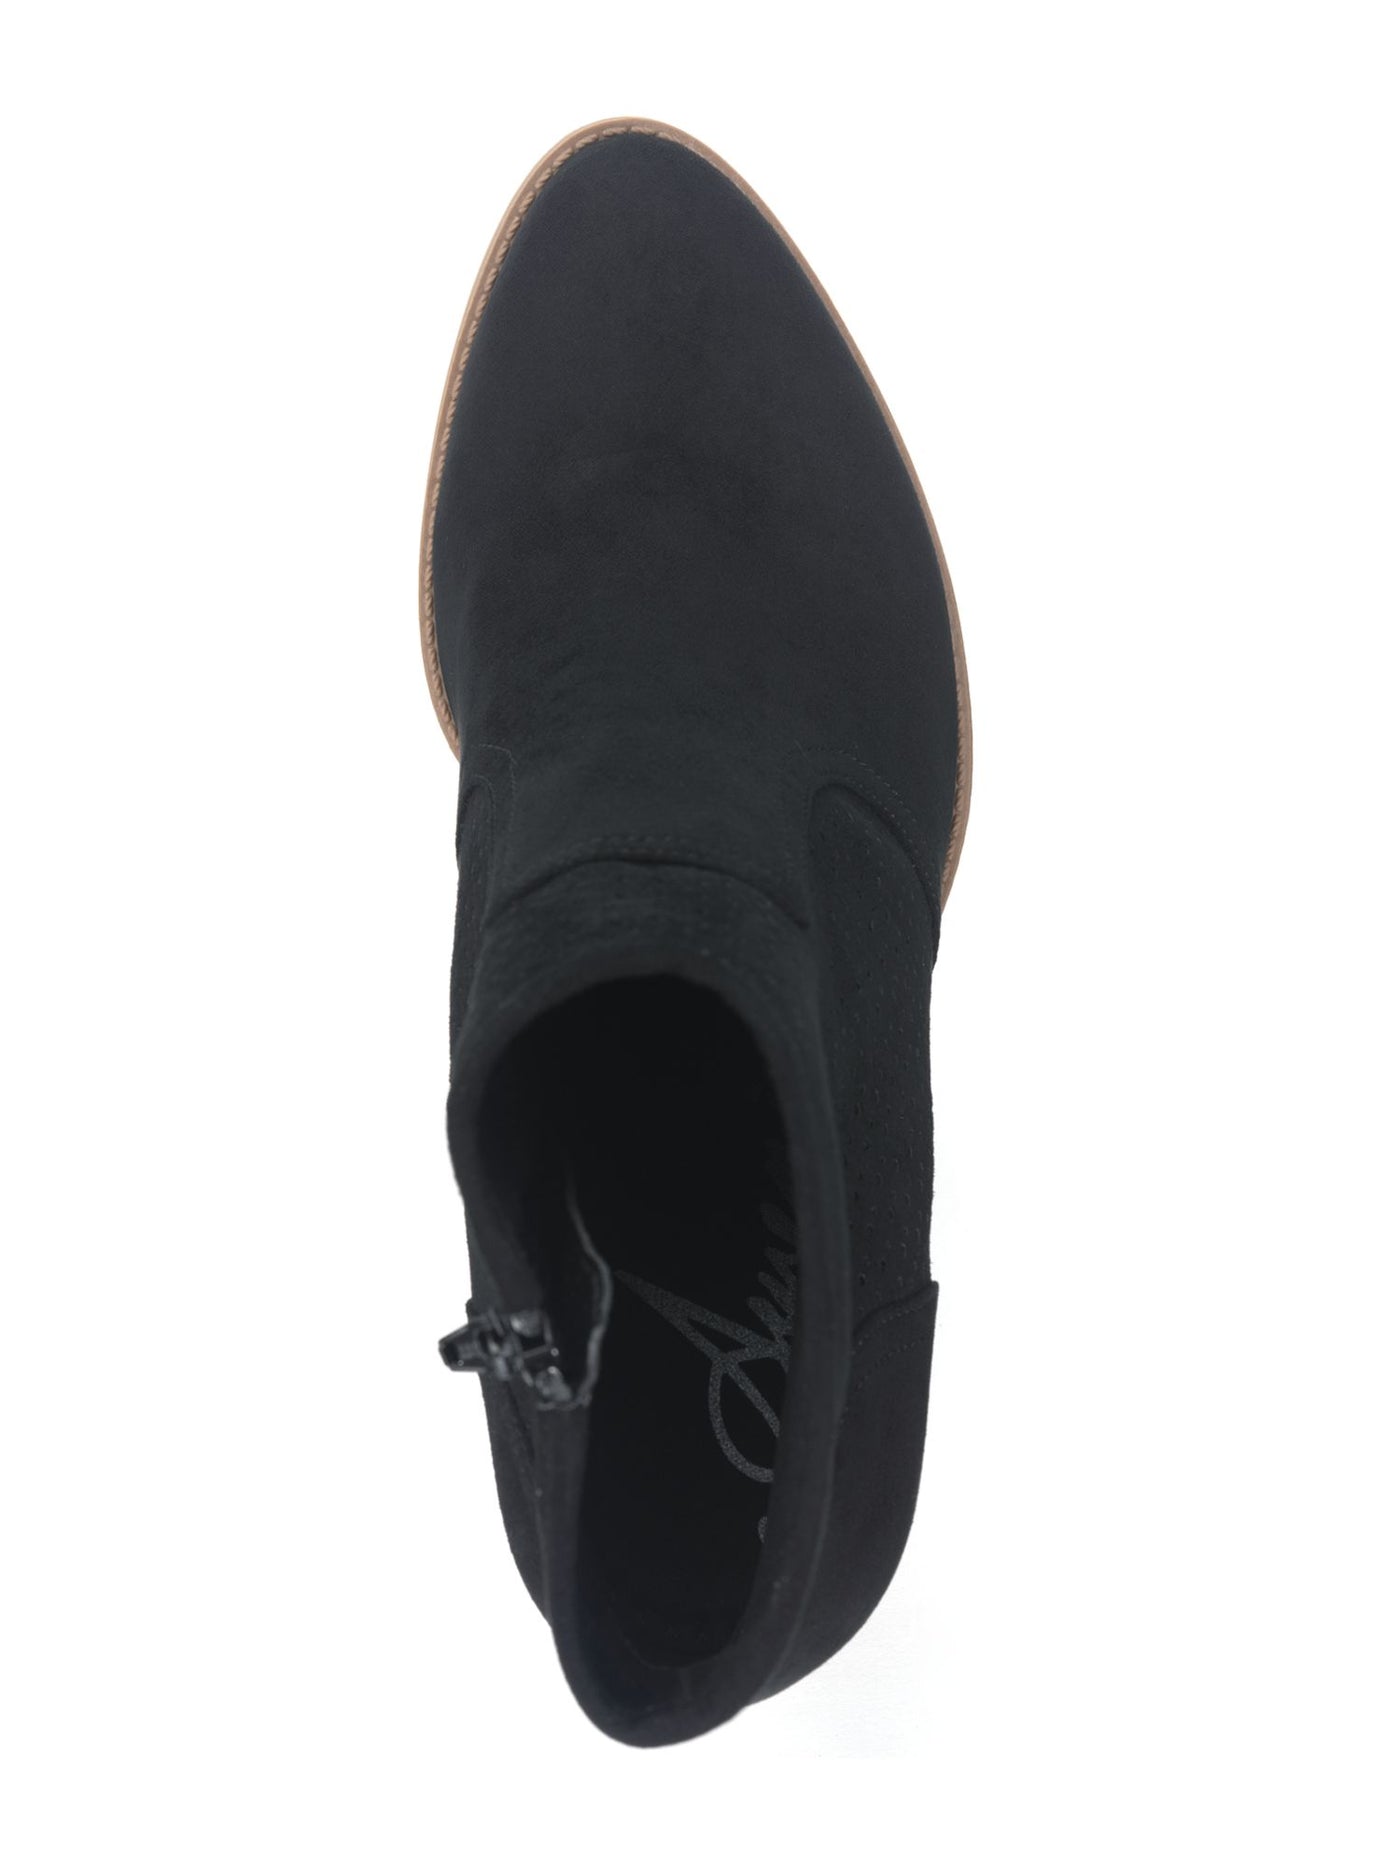 AMERICAN RAG Shoes Black Juniors 9.5 M